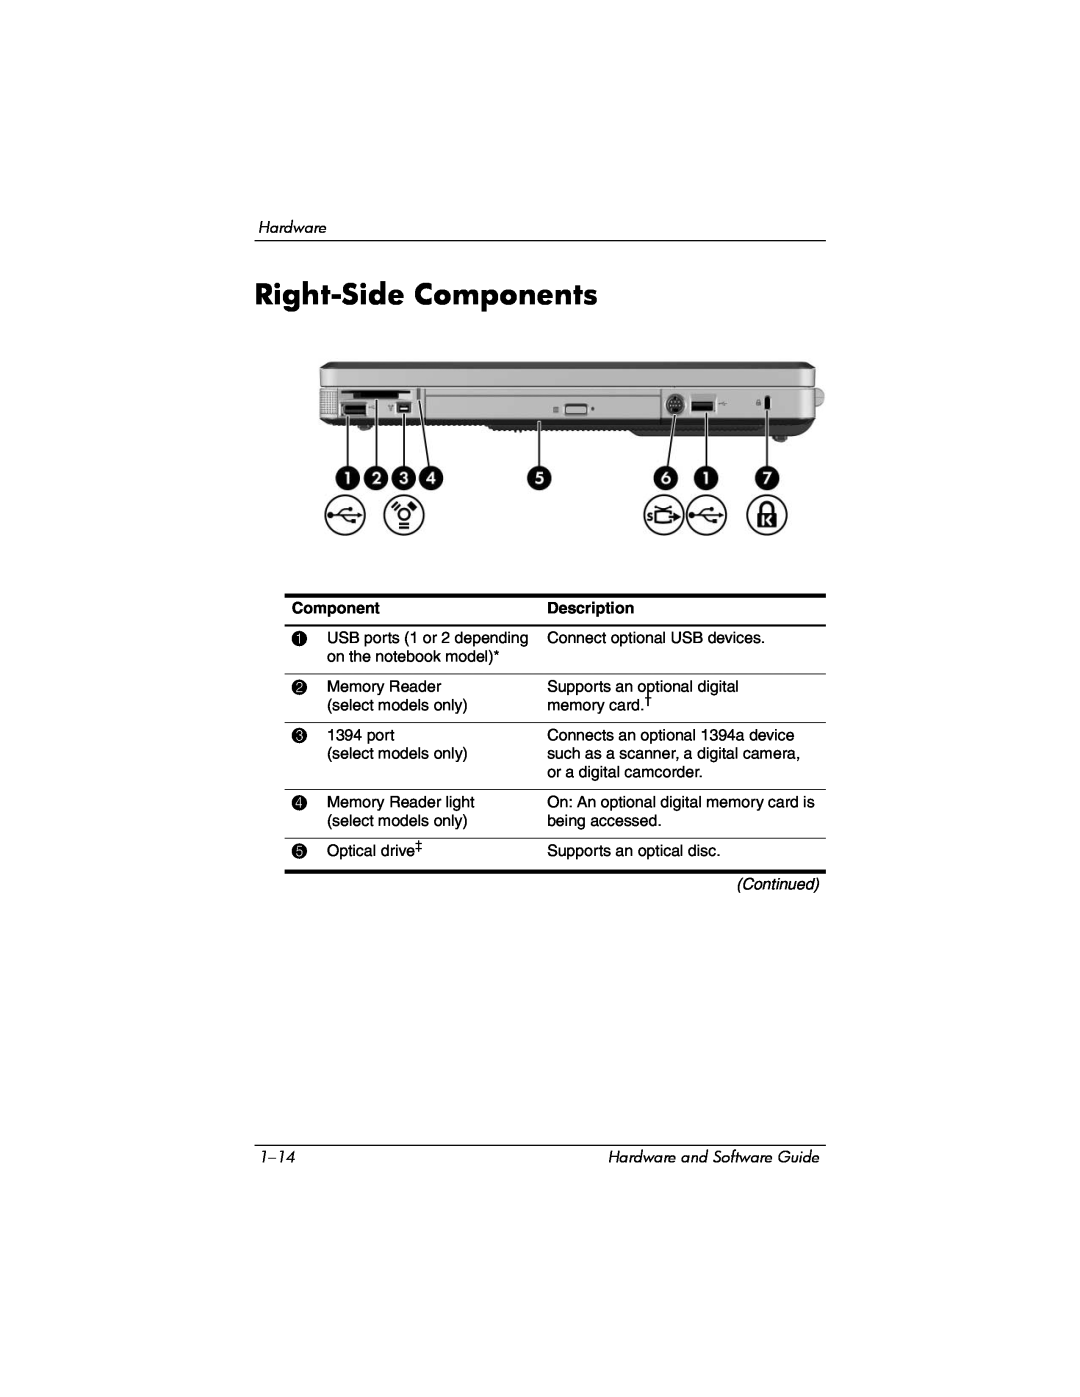 Compaq Presario M2000 manual Right-Side Components, Description 